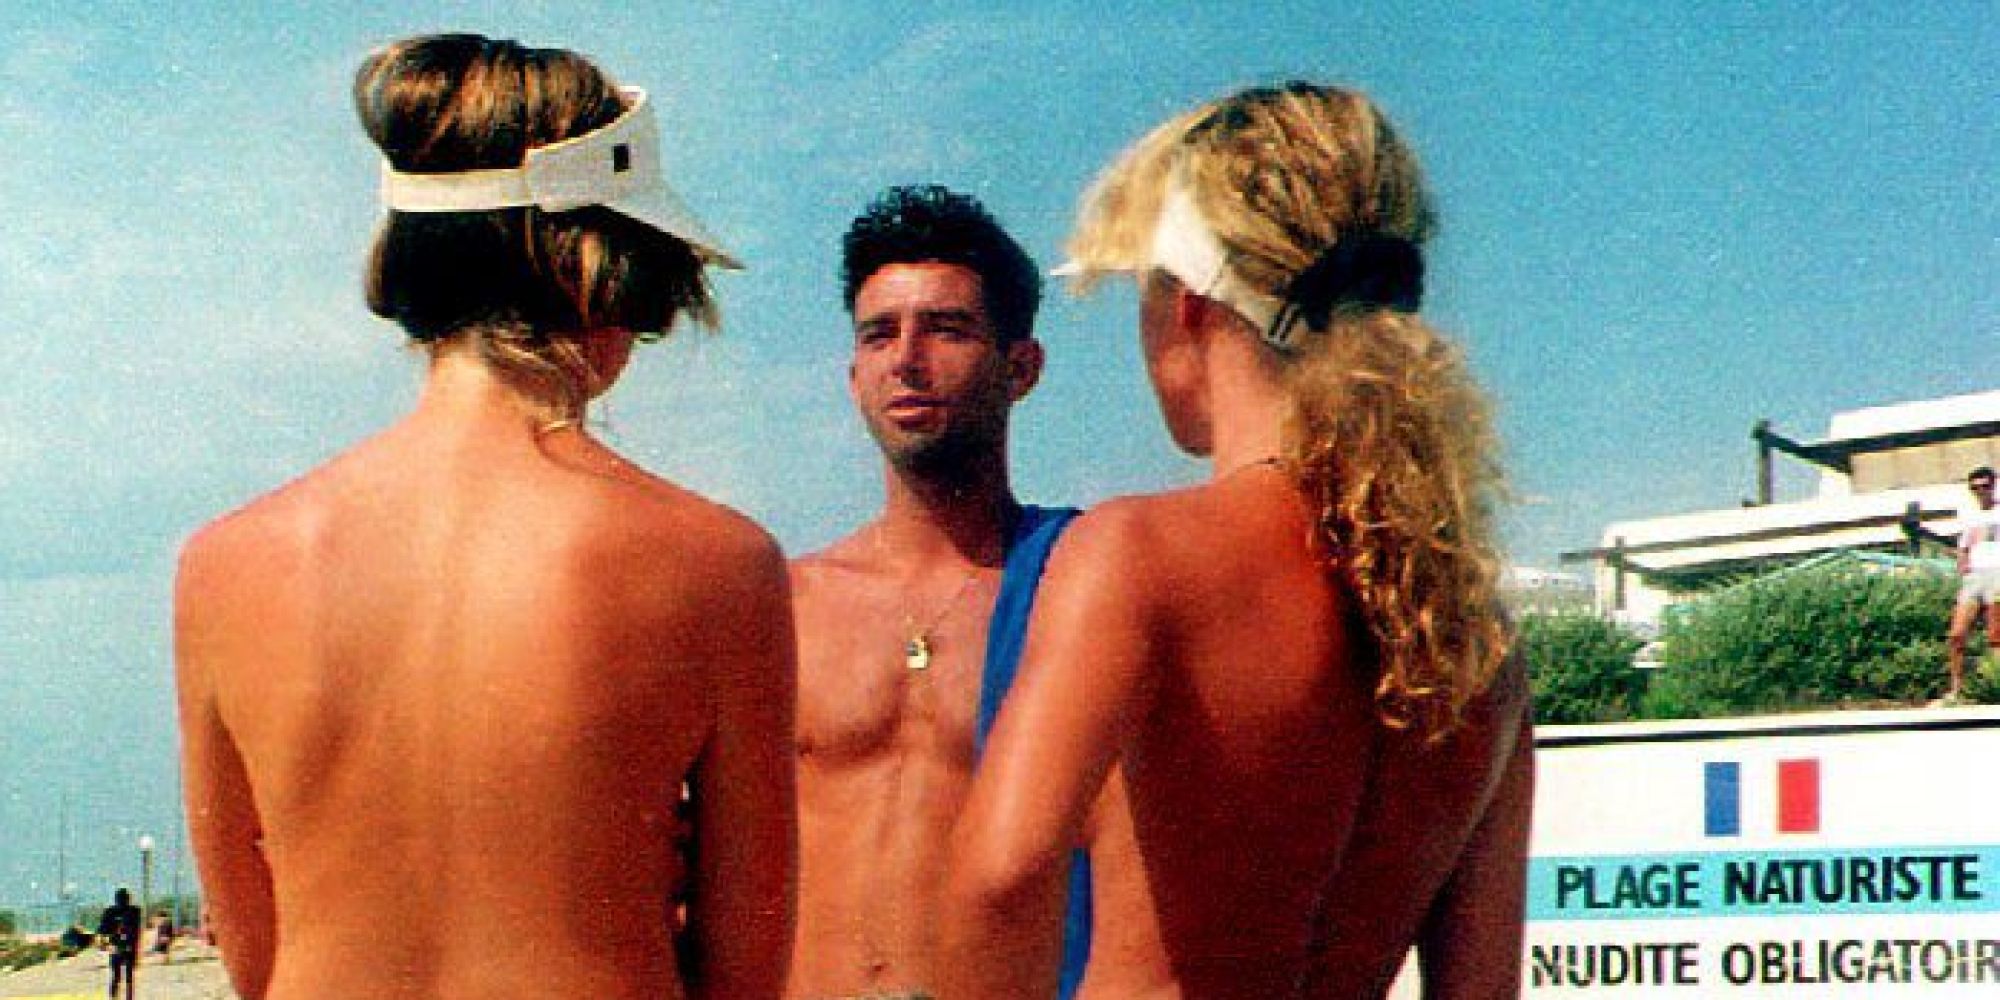 Think, beach naturist naturiste nudist are